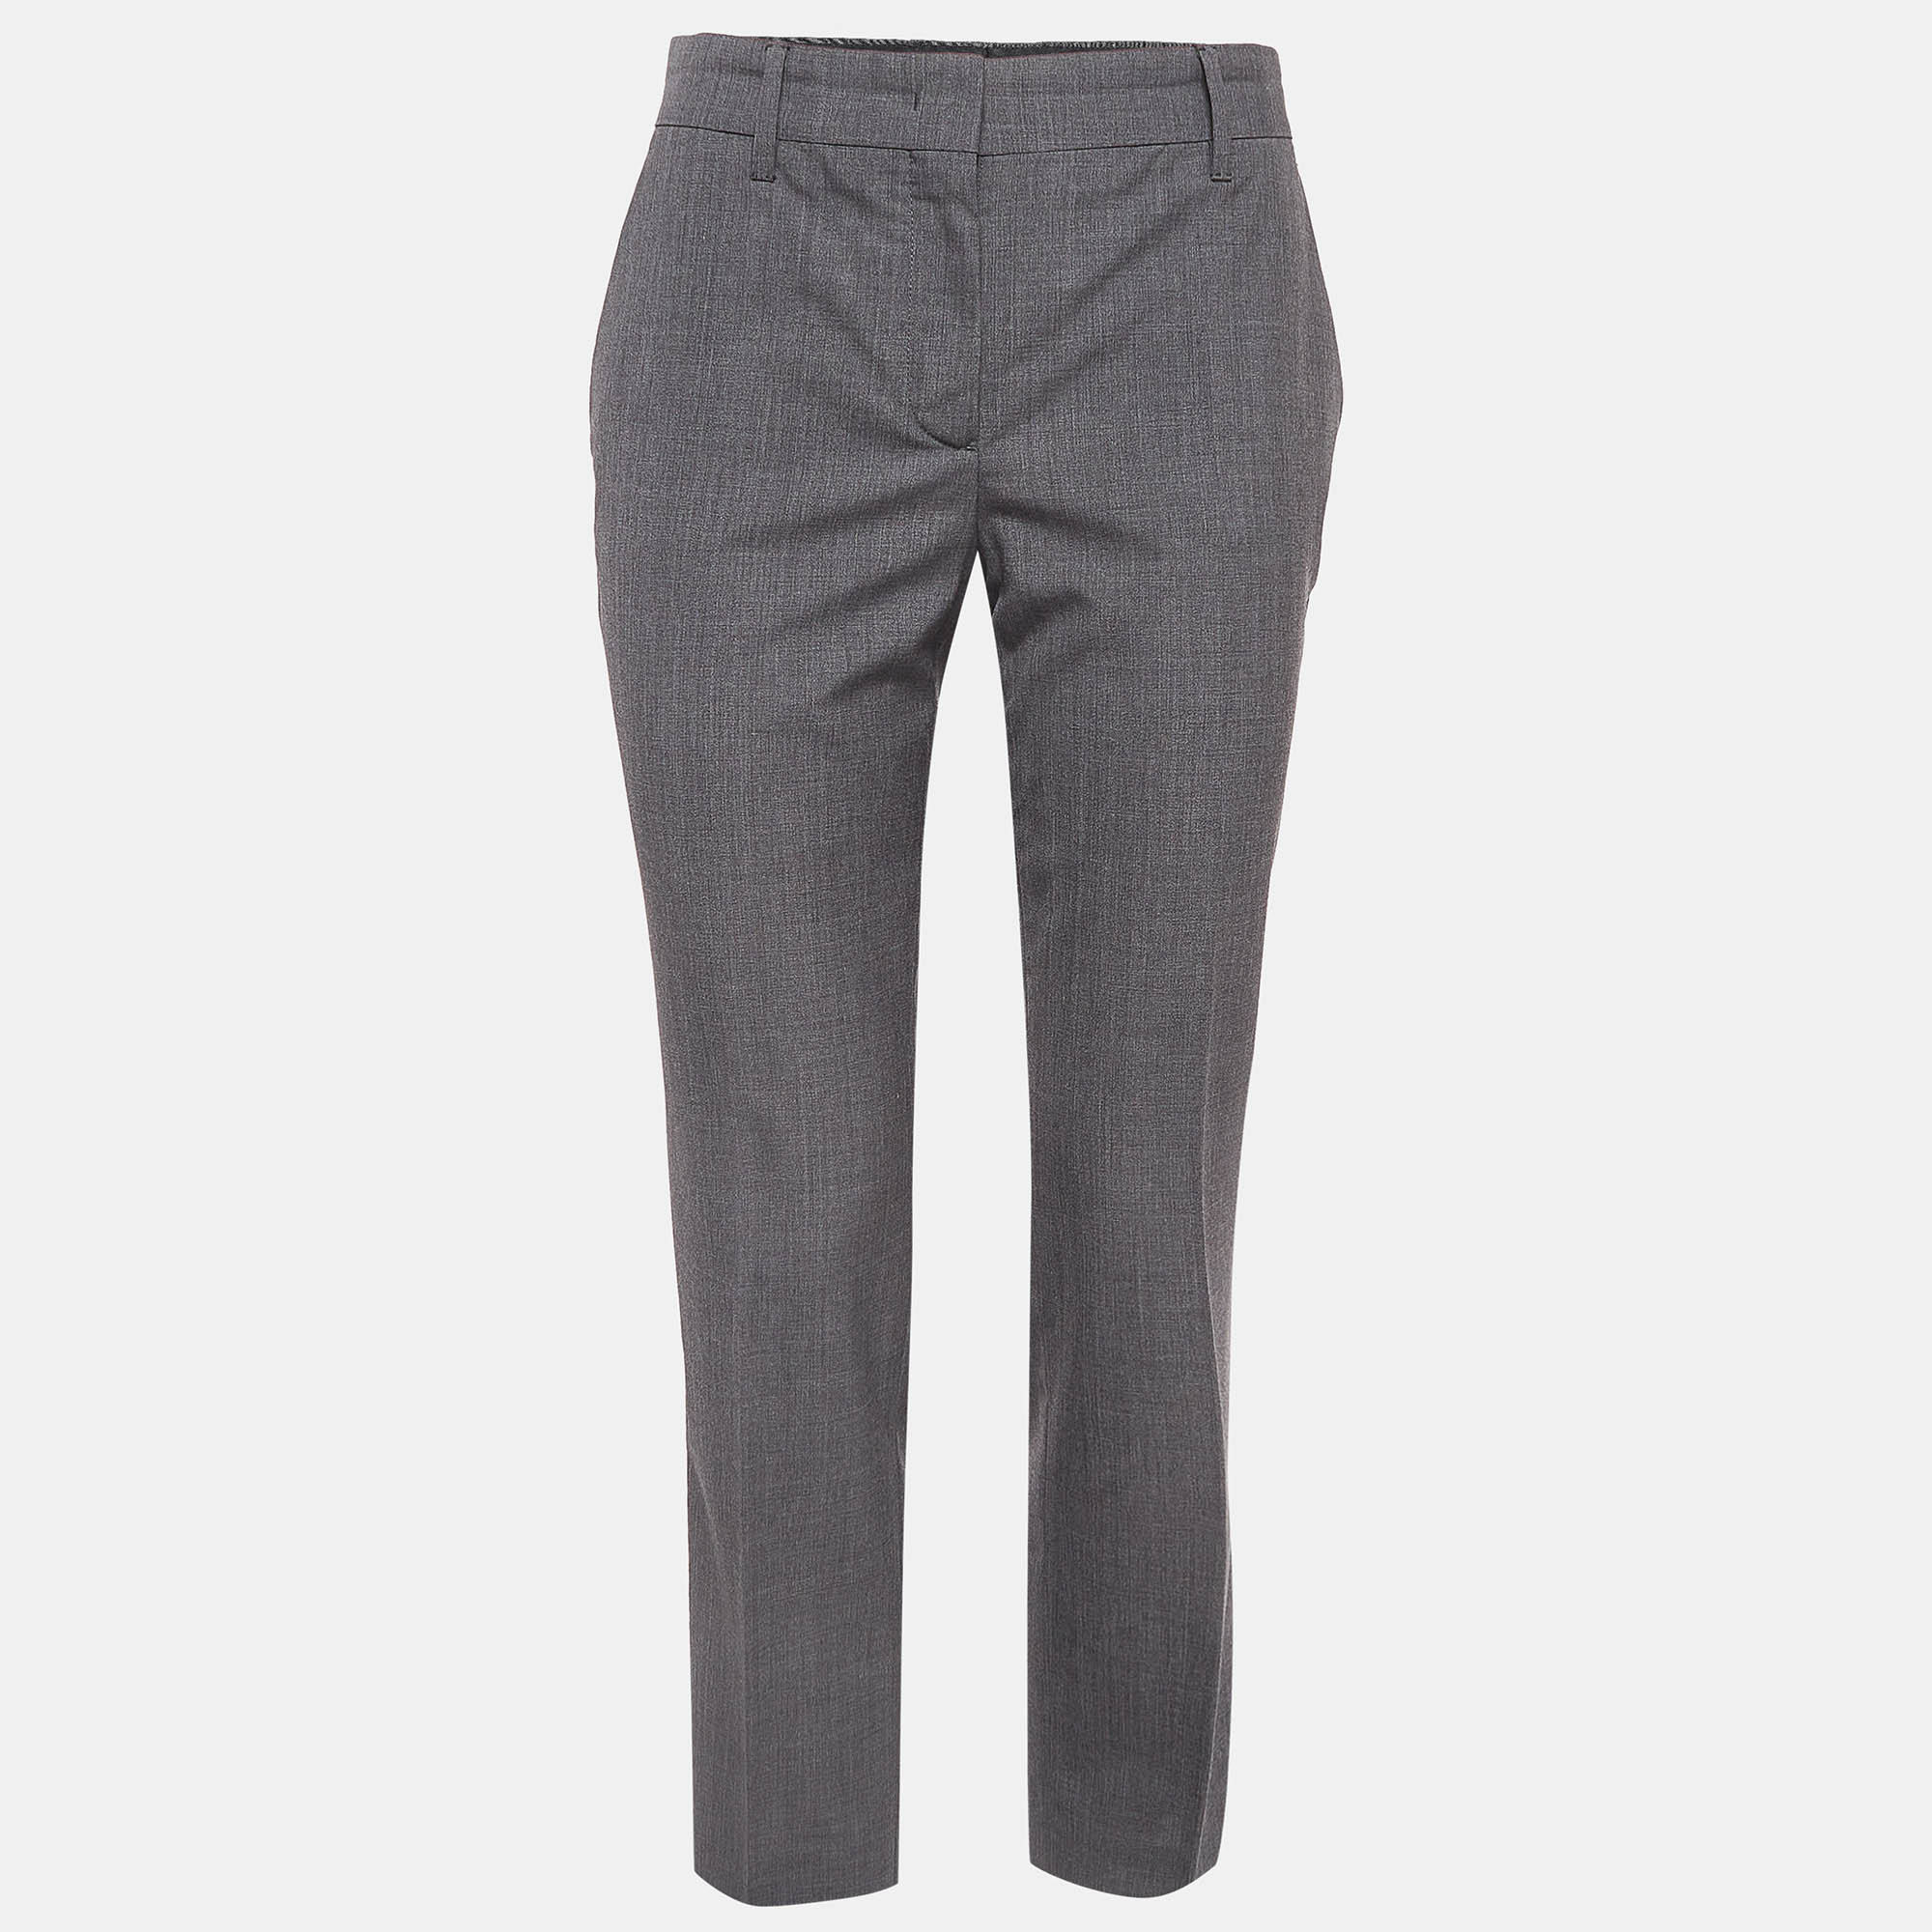 Prada grey wool formal trousers s